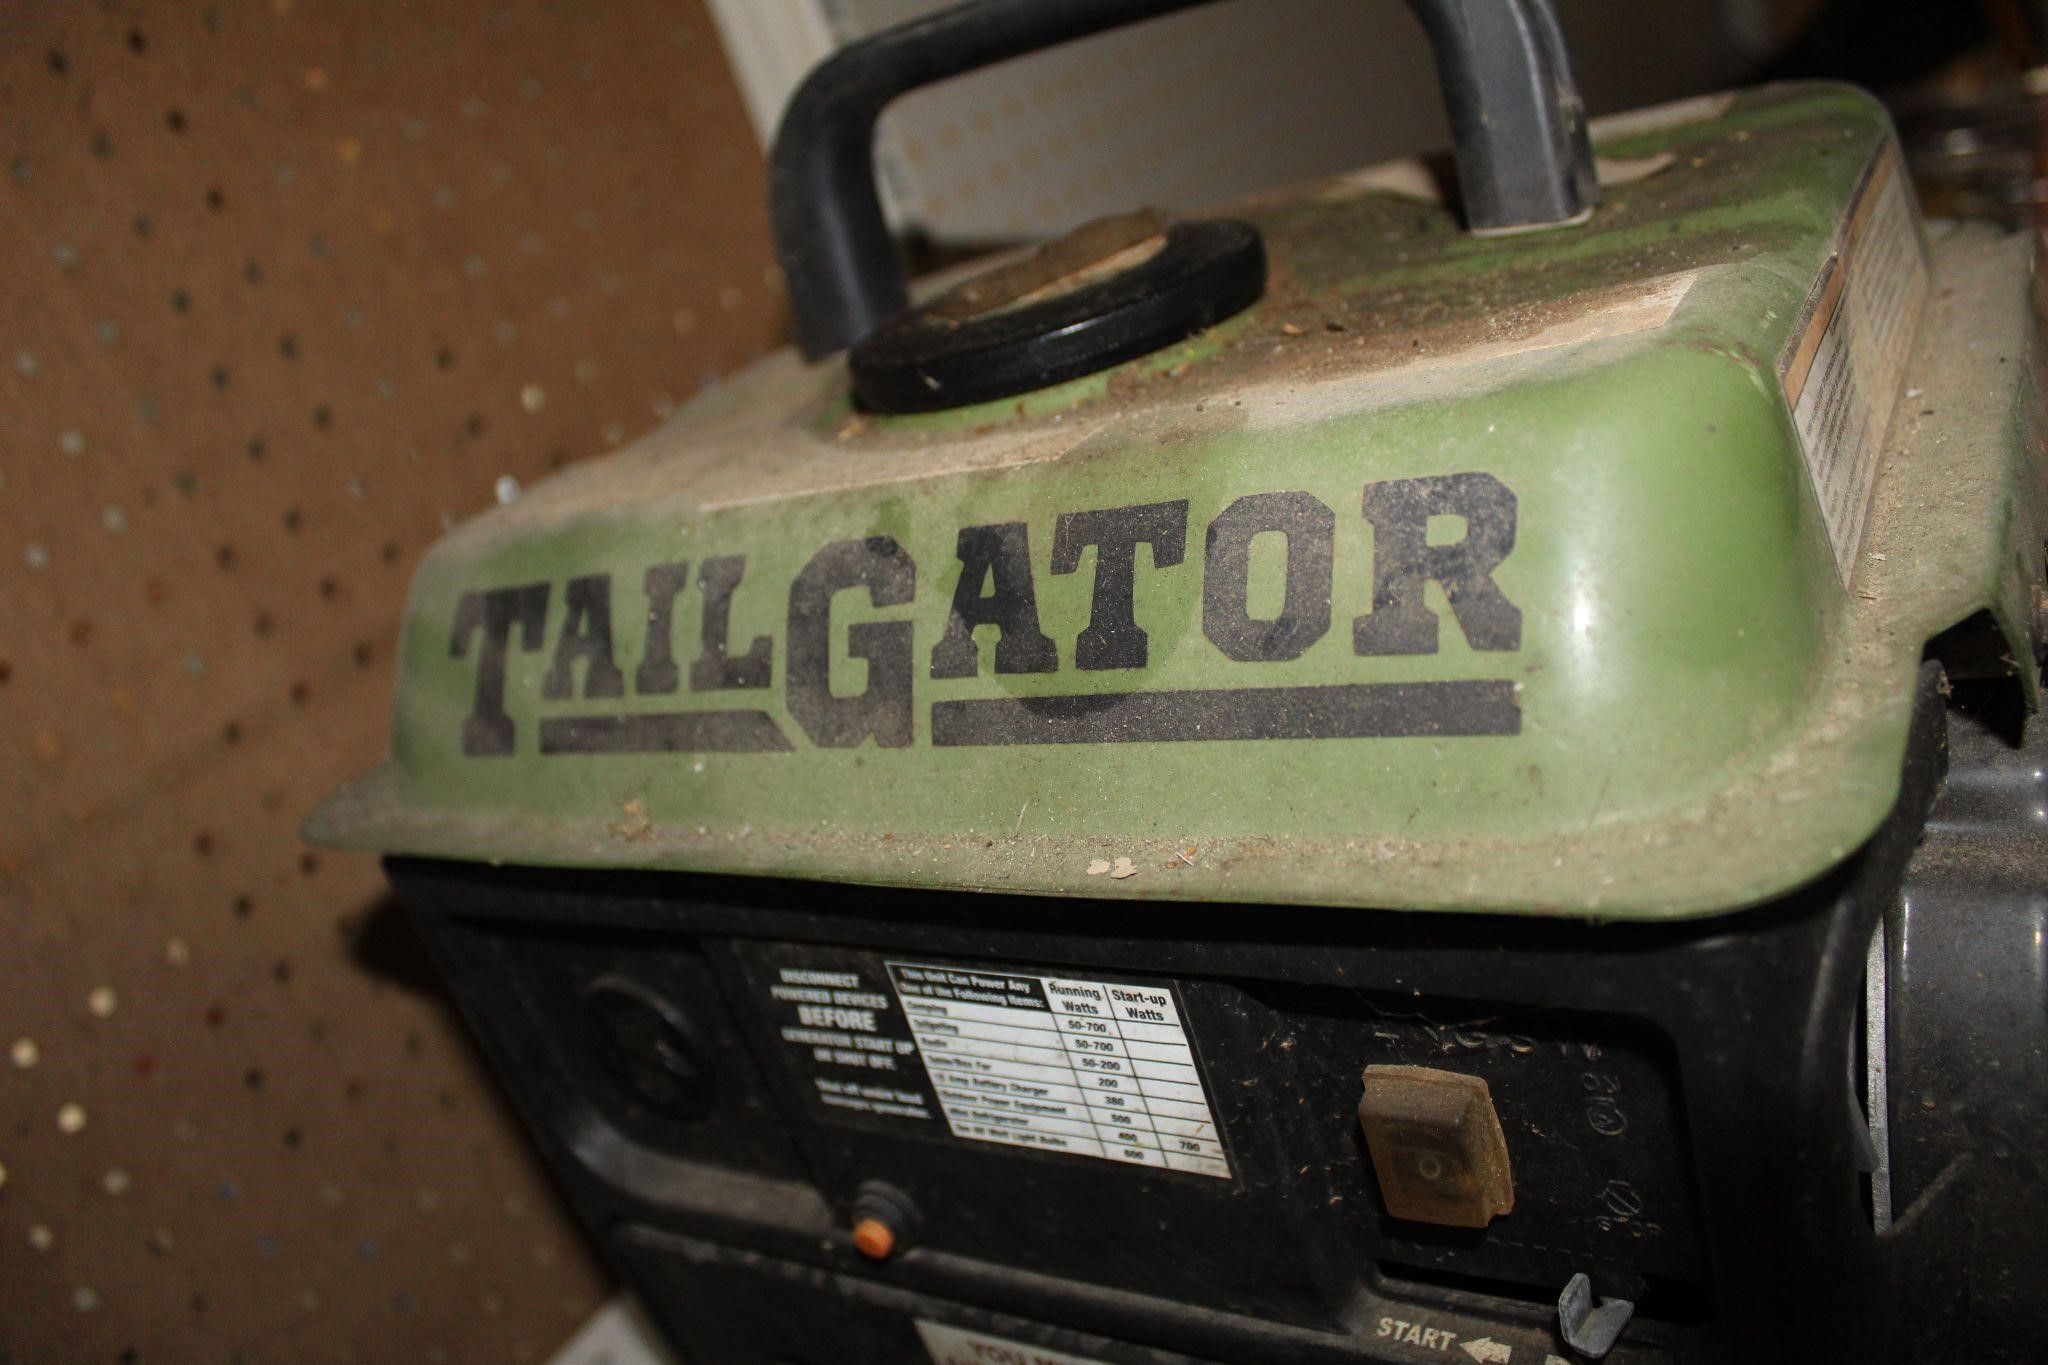 TailGator Generator